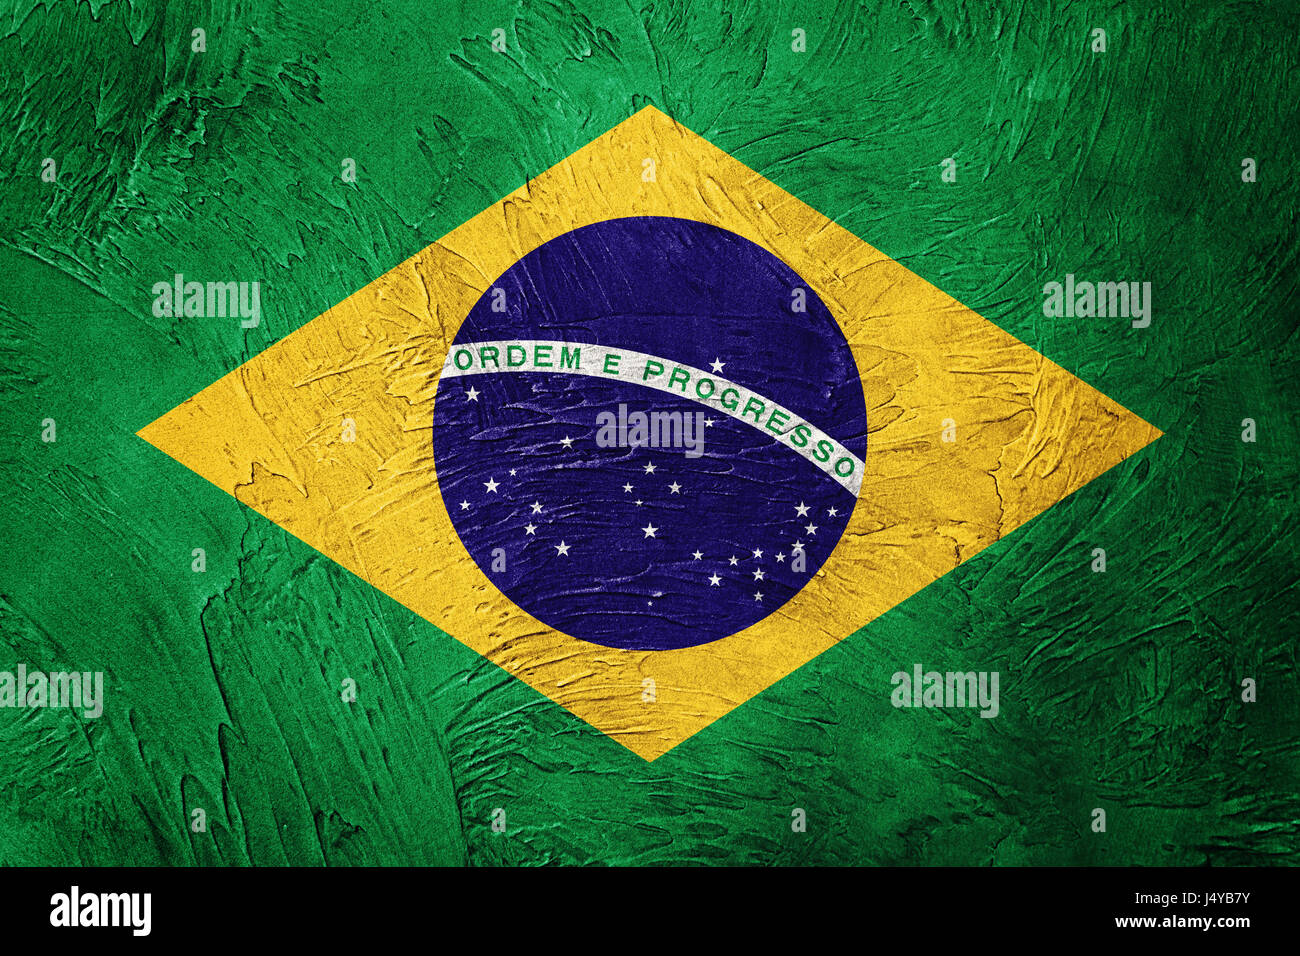 Grunge Brasil flag. Brazilian flag with grunge texture. Stock Photo